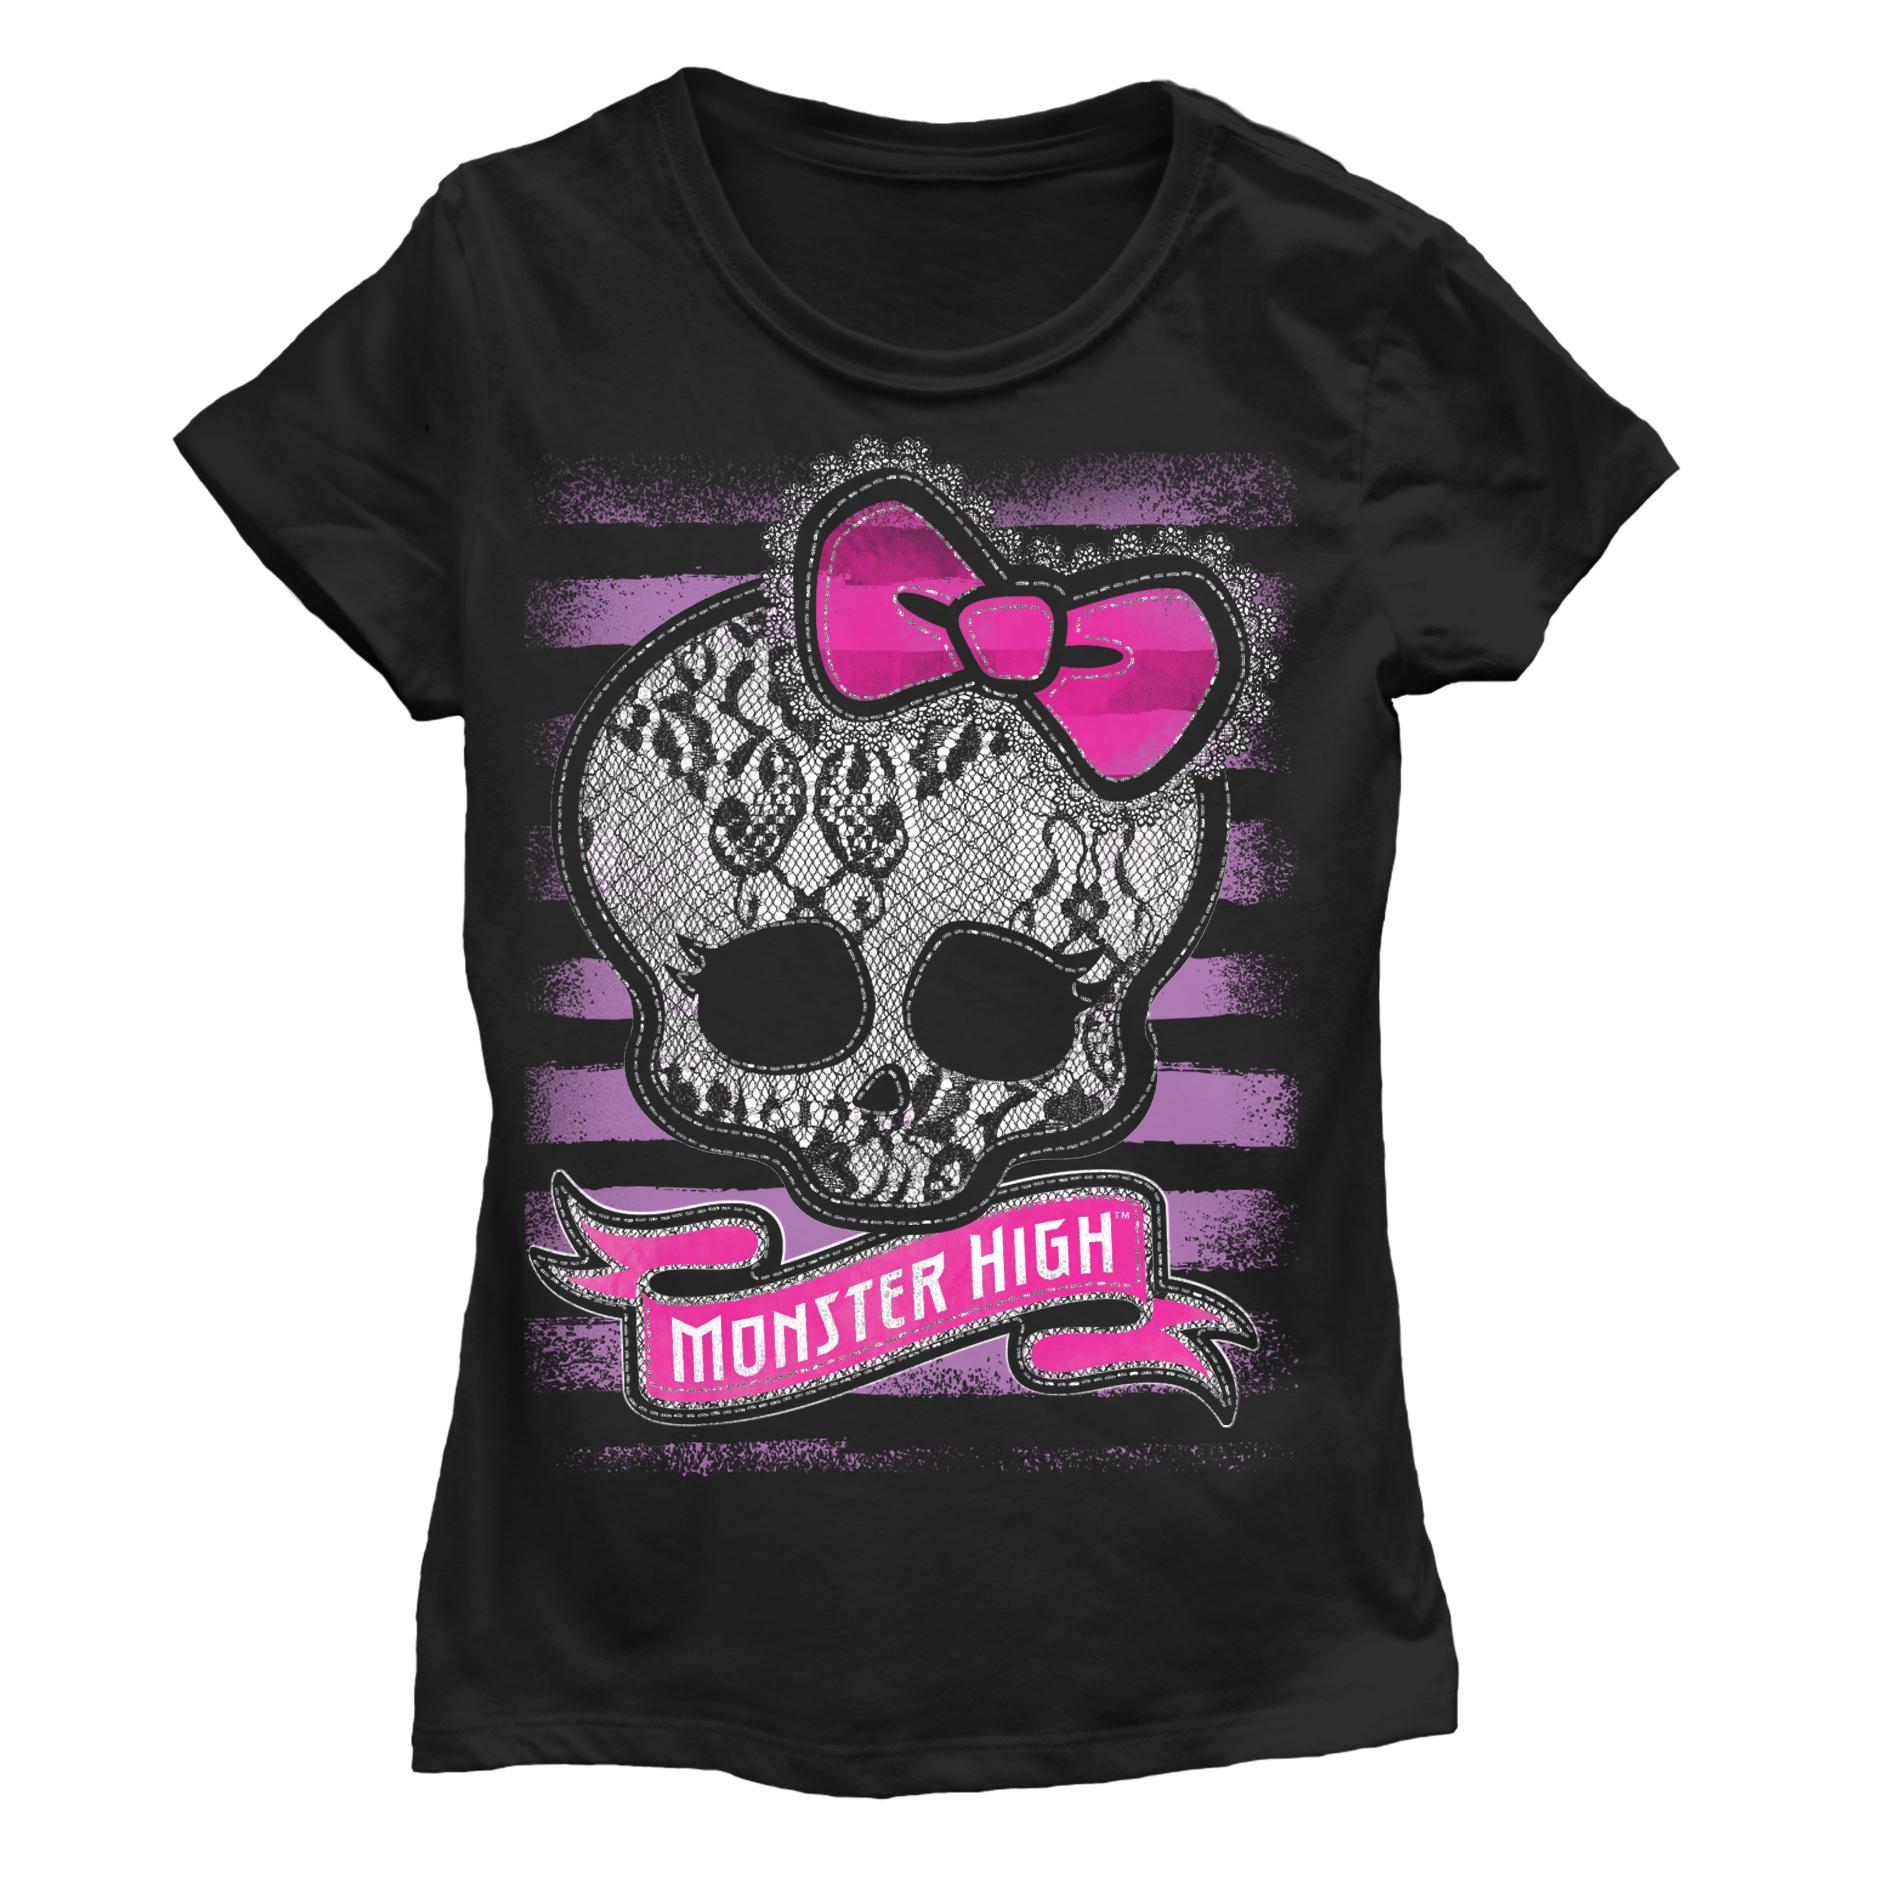 Monster High Girl's Graphic T-Shirt